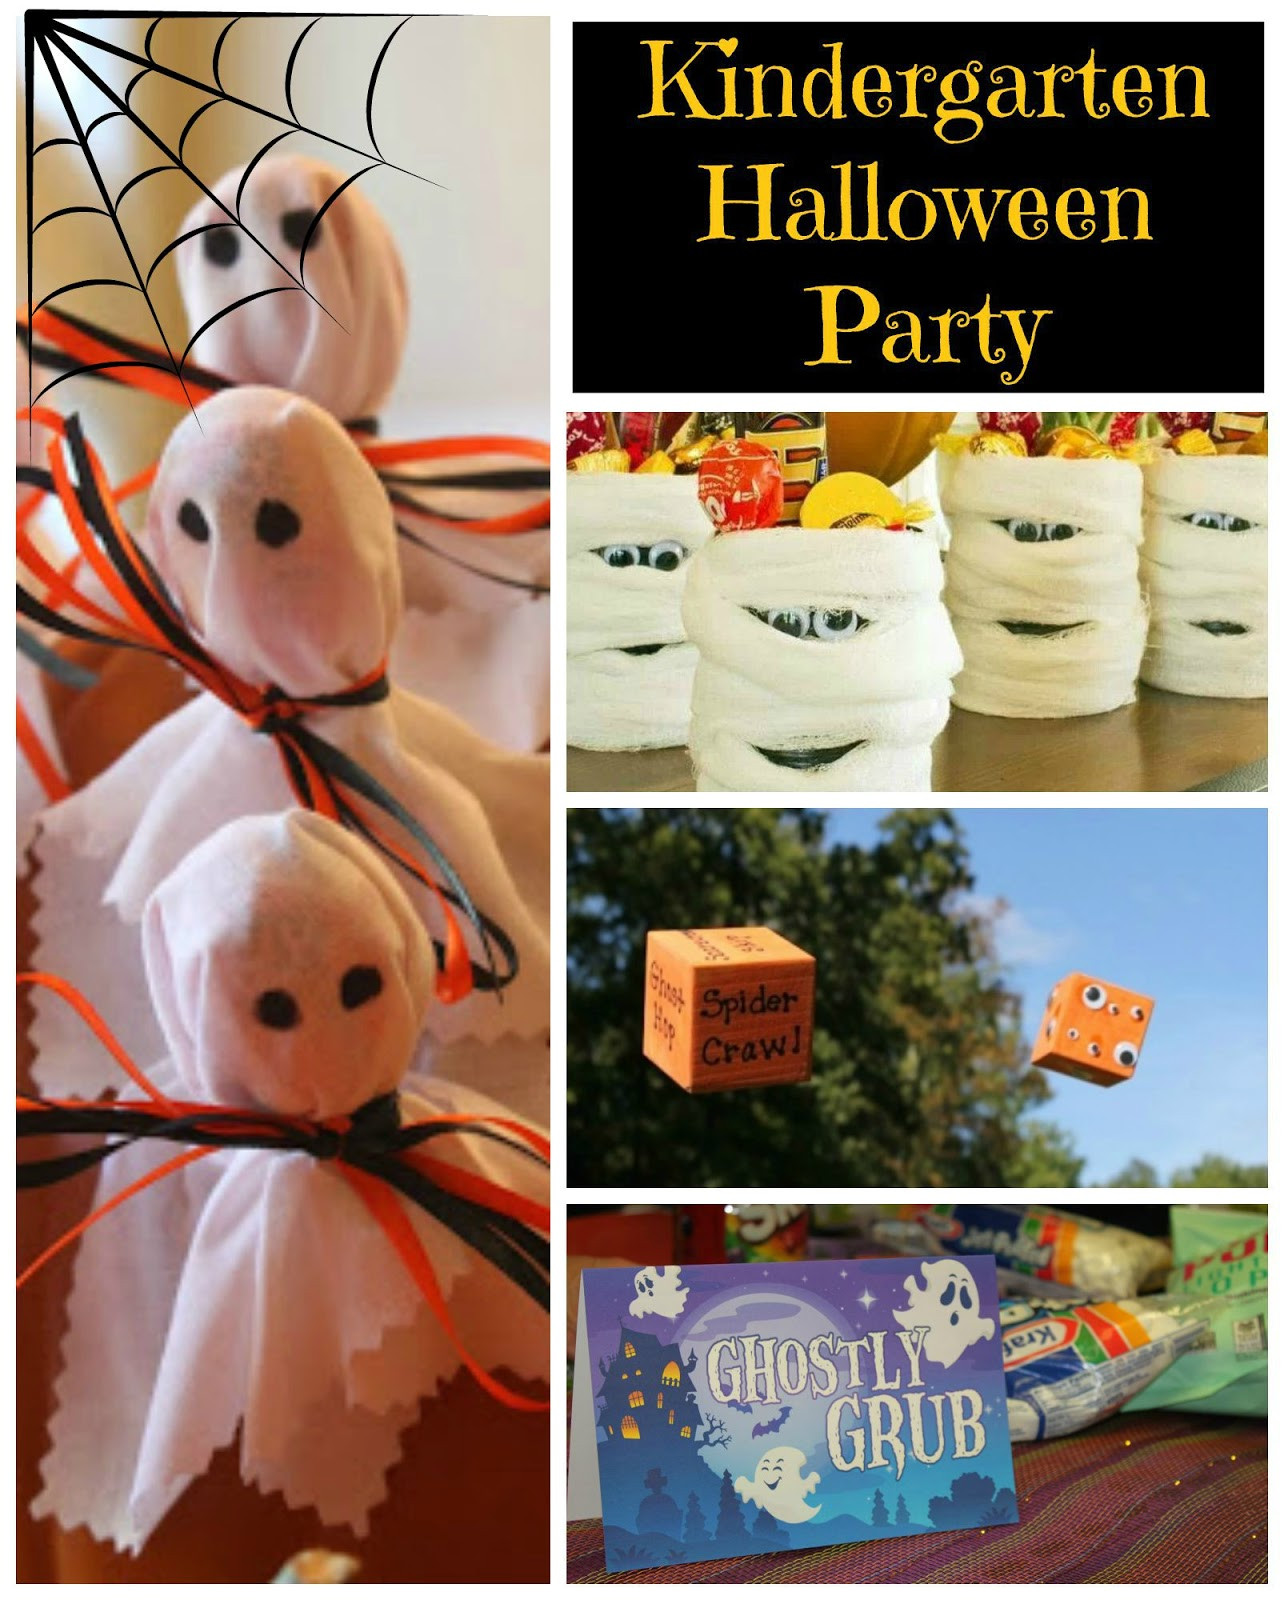 Halloween Classroom Party Ideas Kindergarten
 Keeping up with the Kiddos Kindergarten Halloween Party